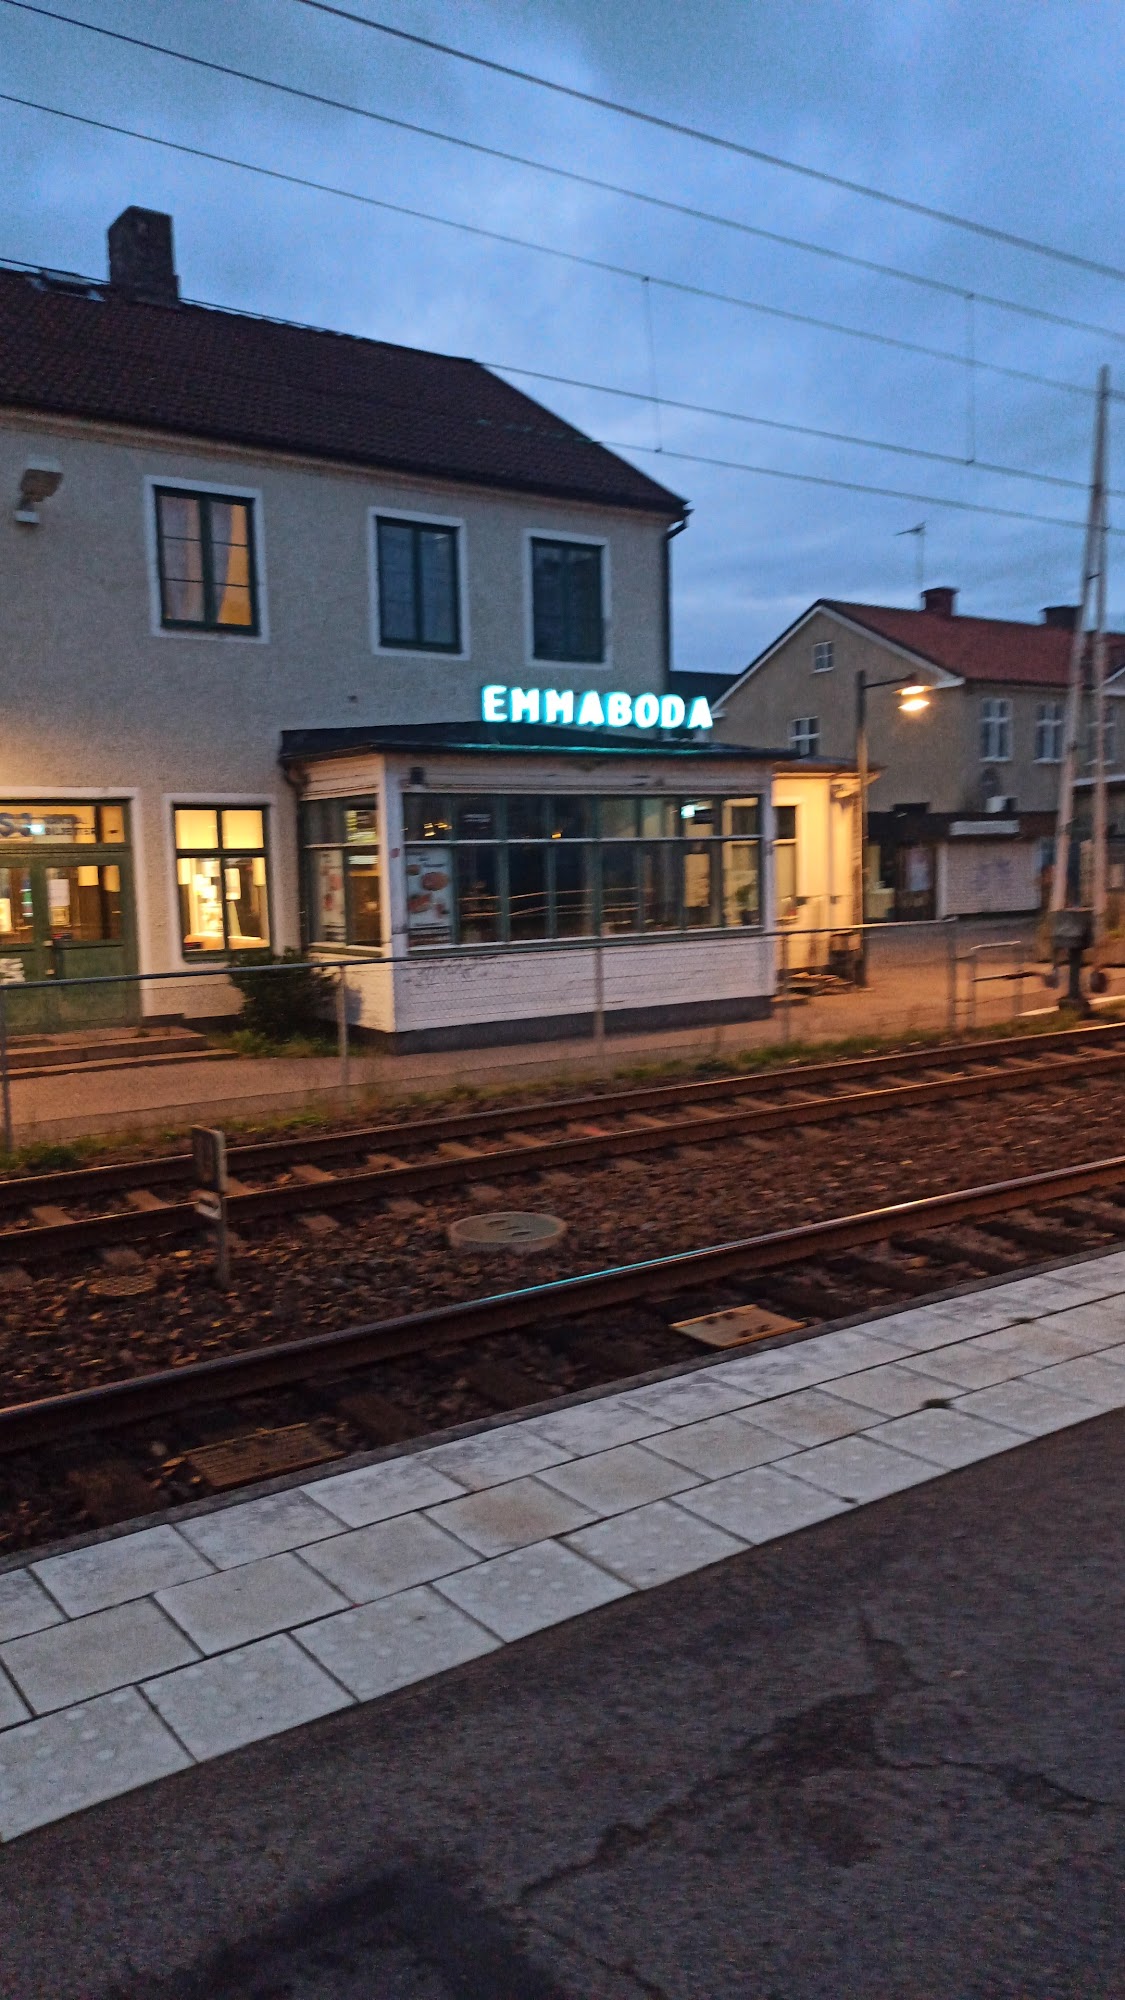 Emmaboda station